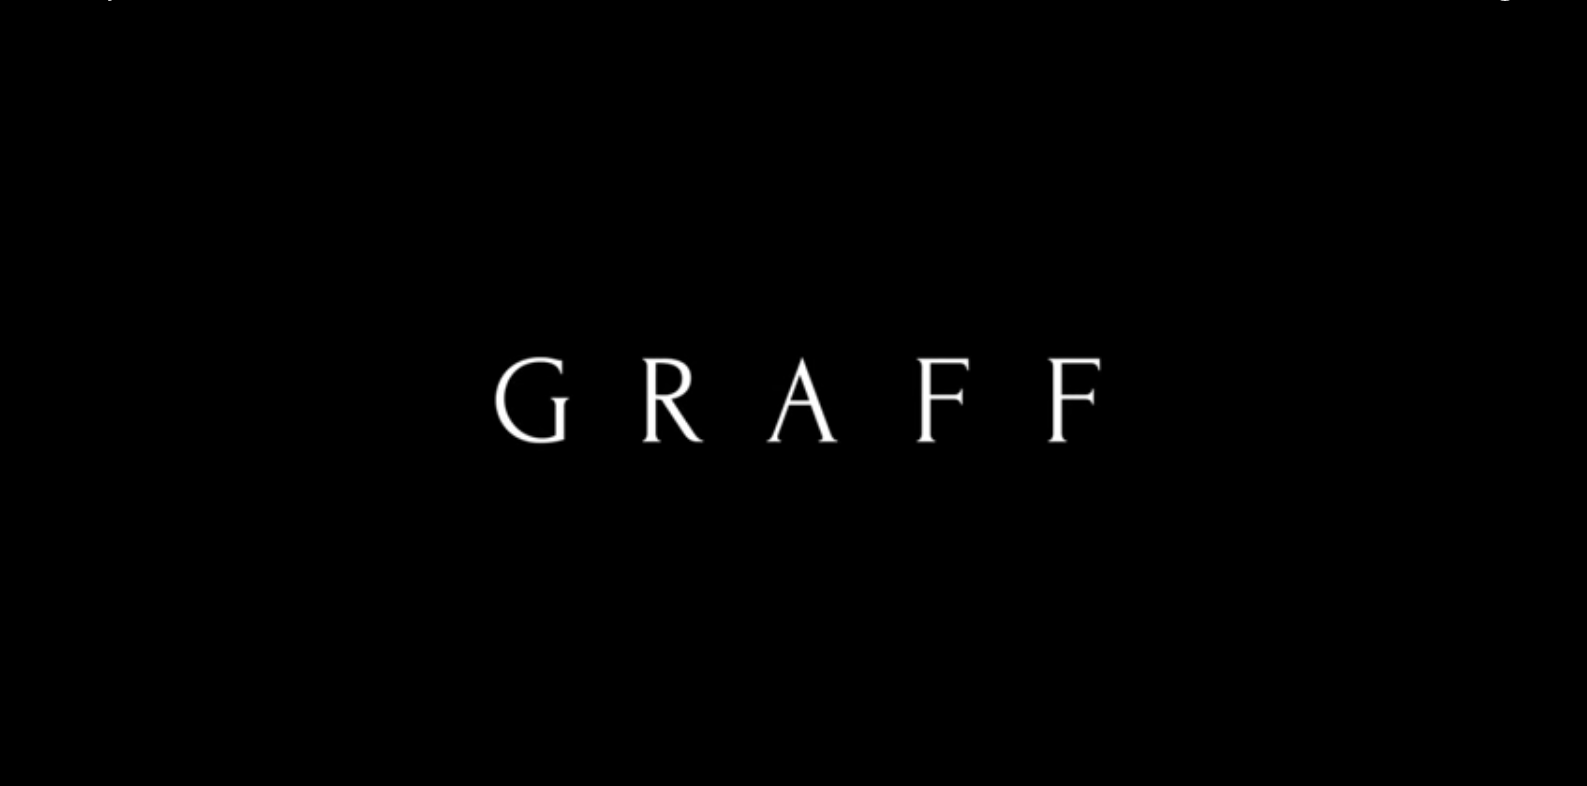 Graff Logo - Graff Diamond Marketing for B2B and Finance